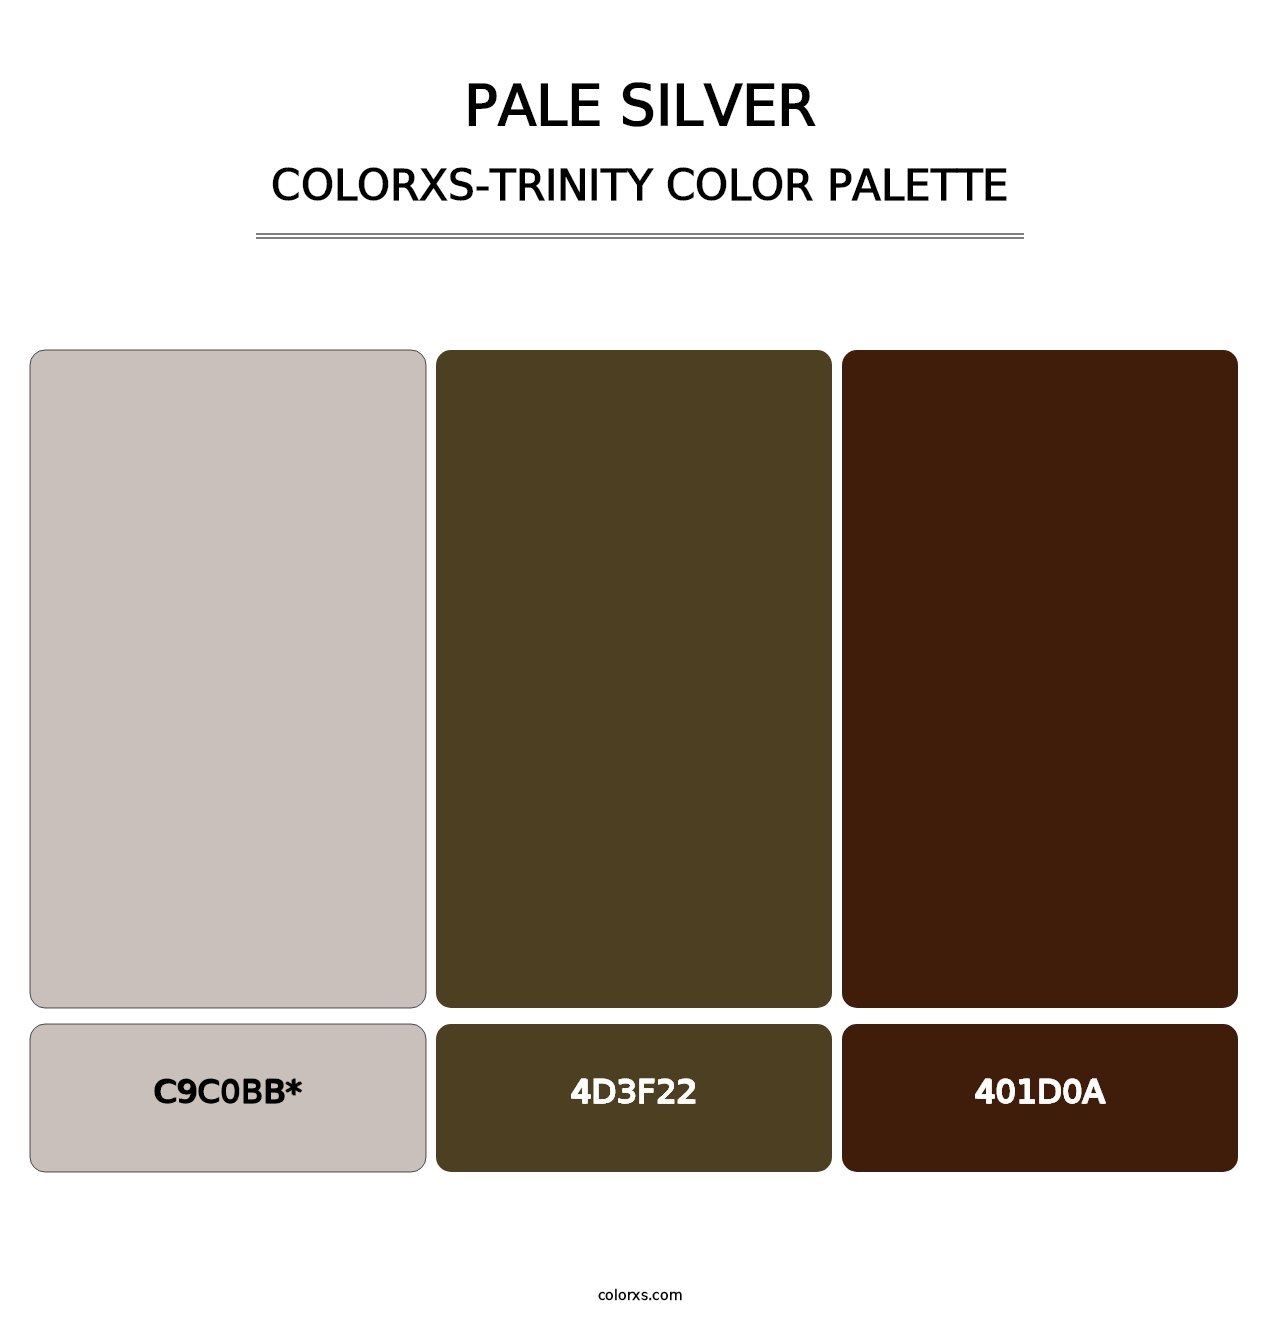 Pale Silver - Colorxs Trinity Palette